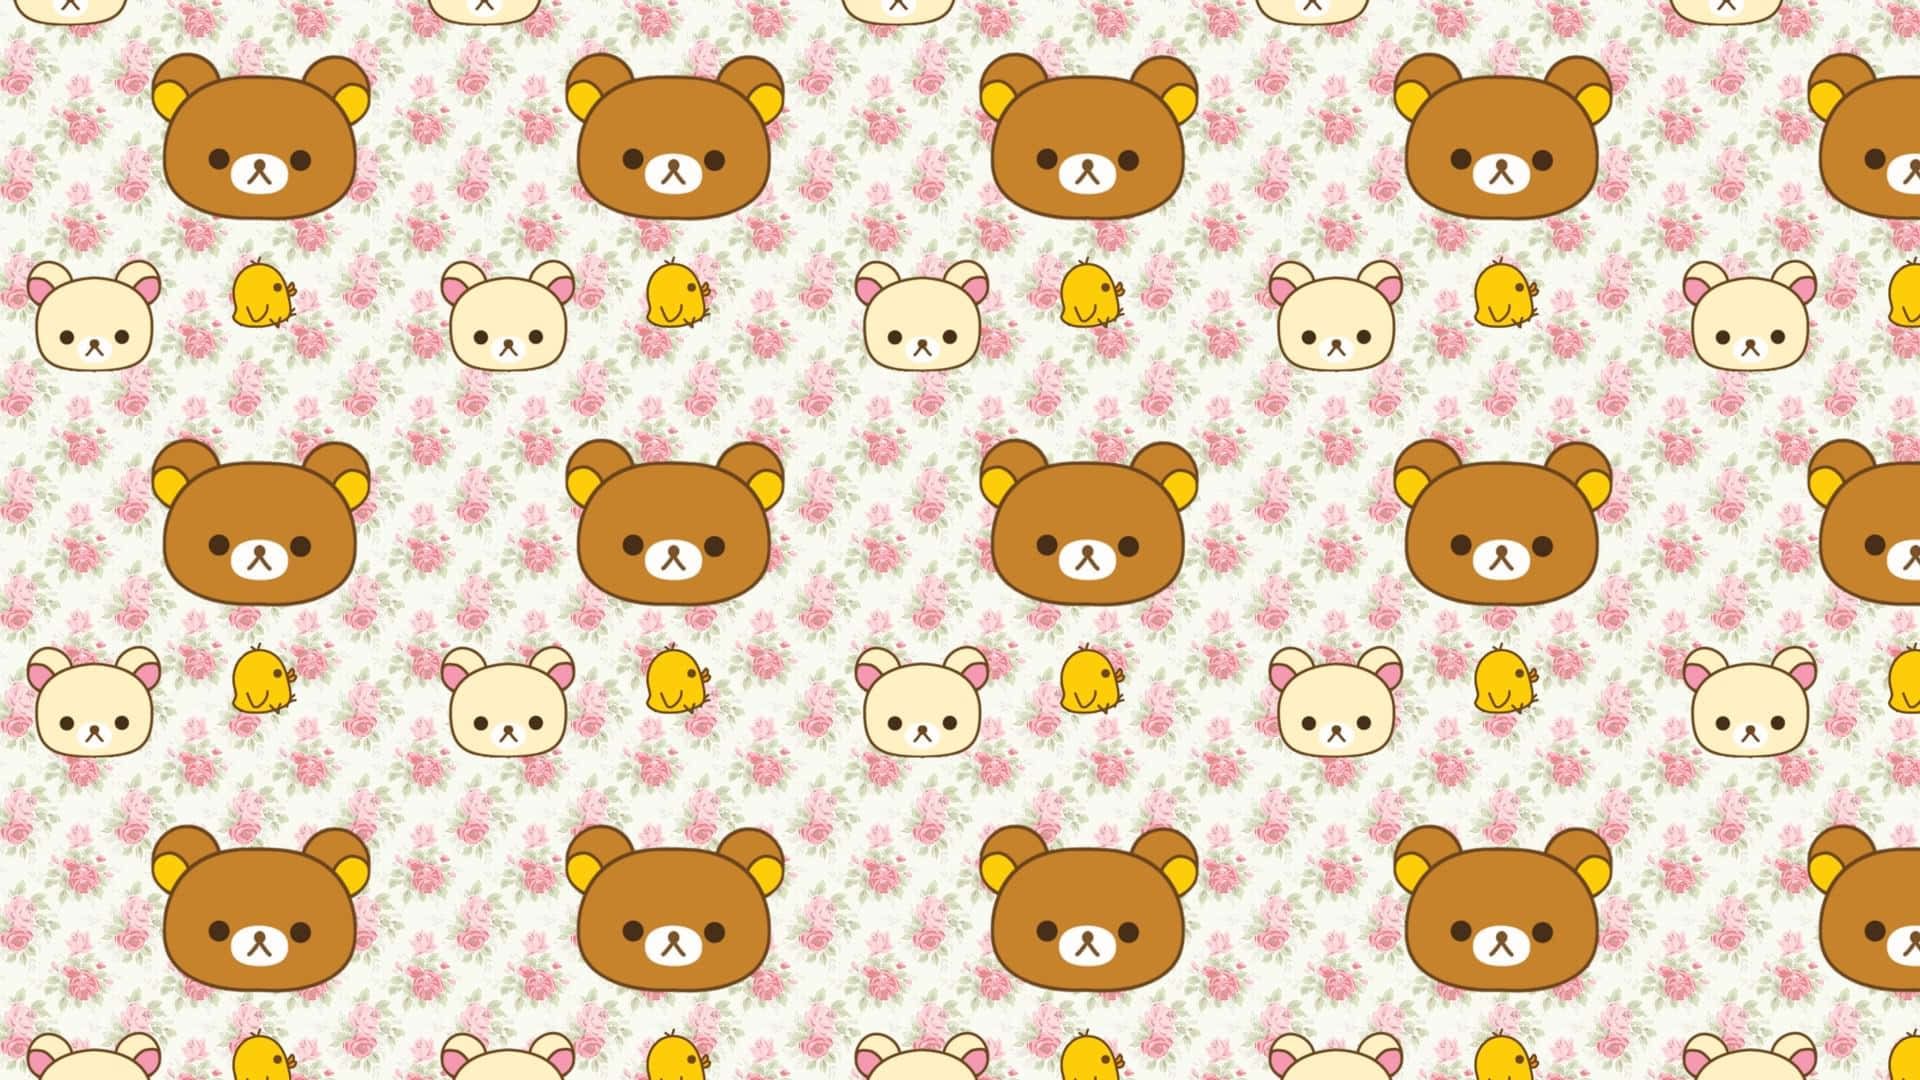 Take your favorite bear along as you go with the Rilakkuma laptop! Wallpaper